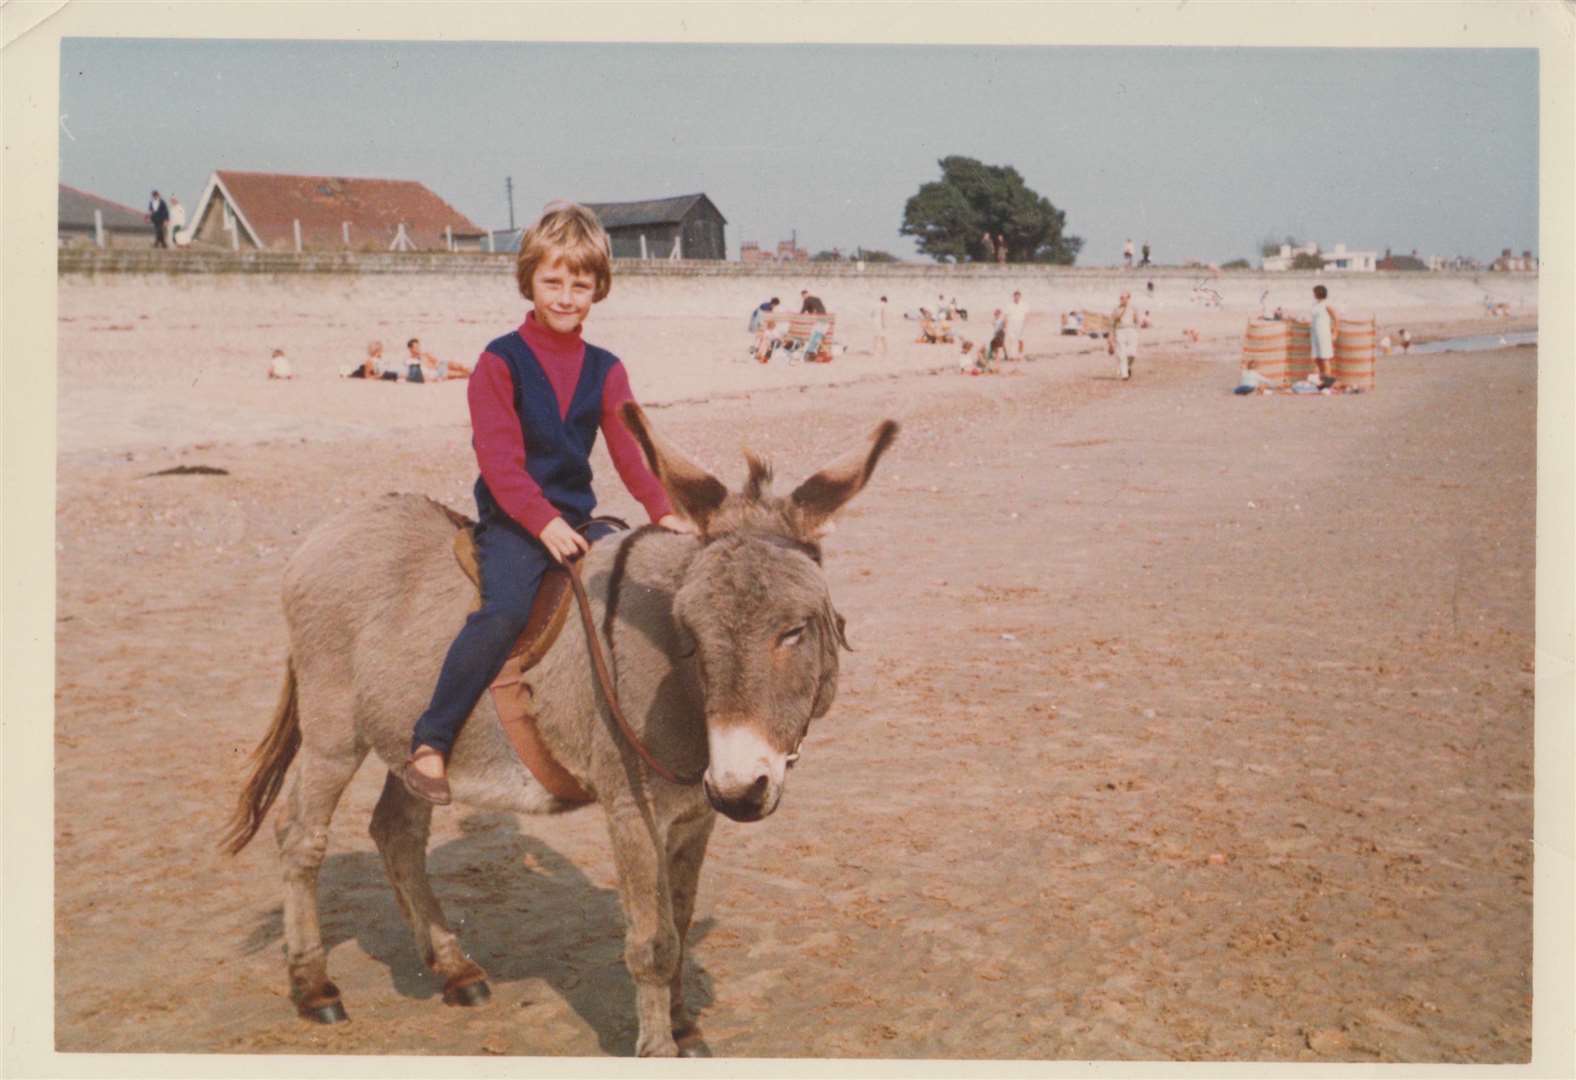 John's daughter daughter Deana on a donkey